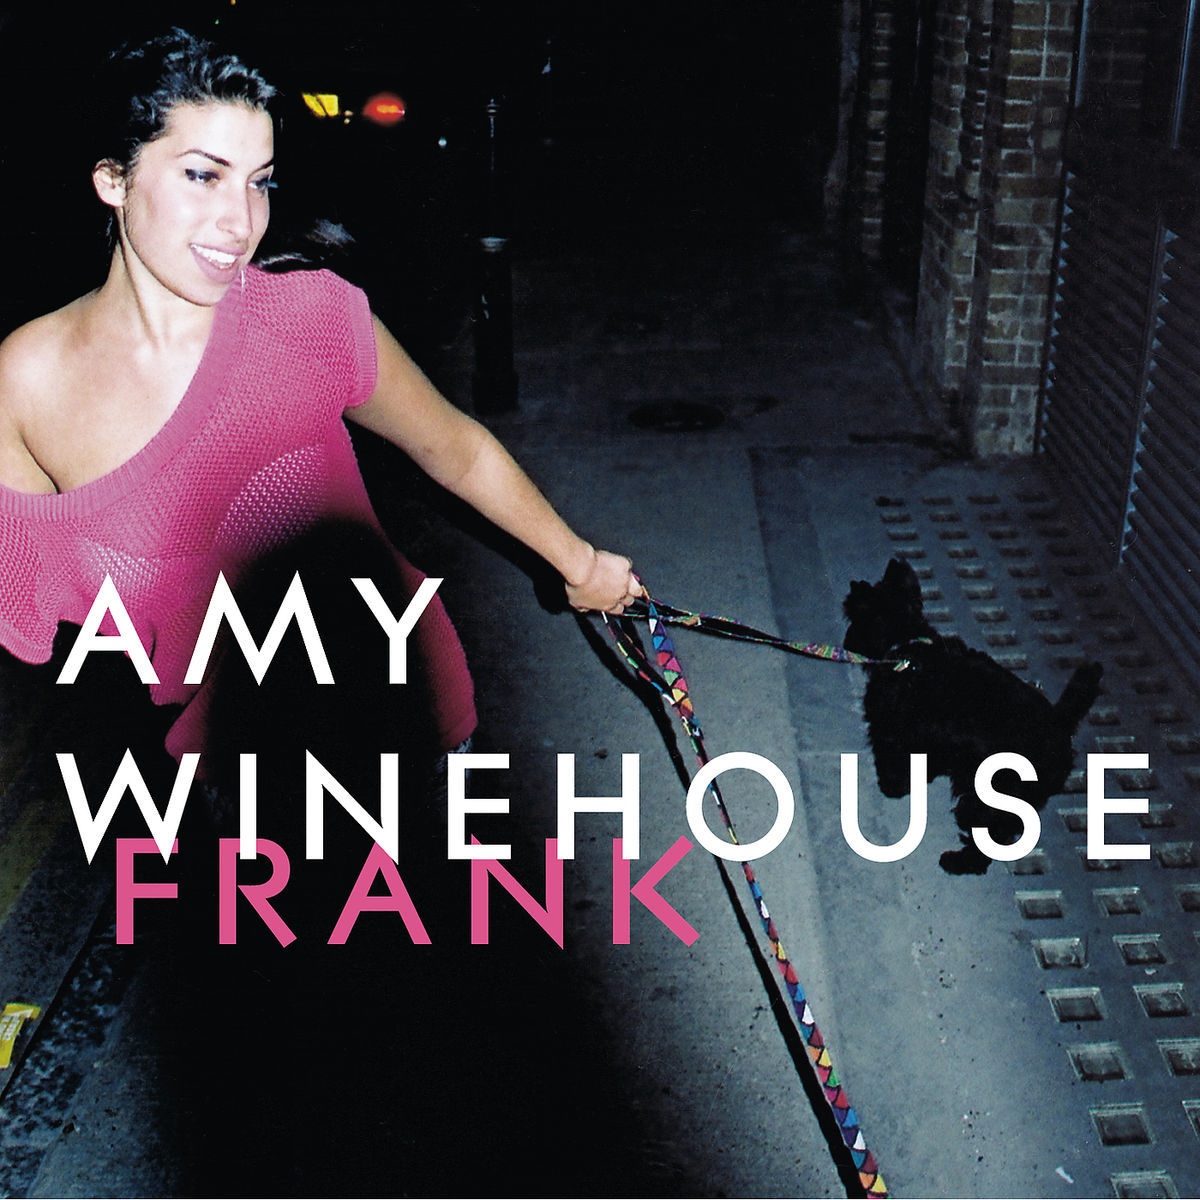 Frank - Amy Winehouse. (CD)